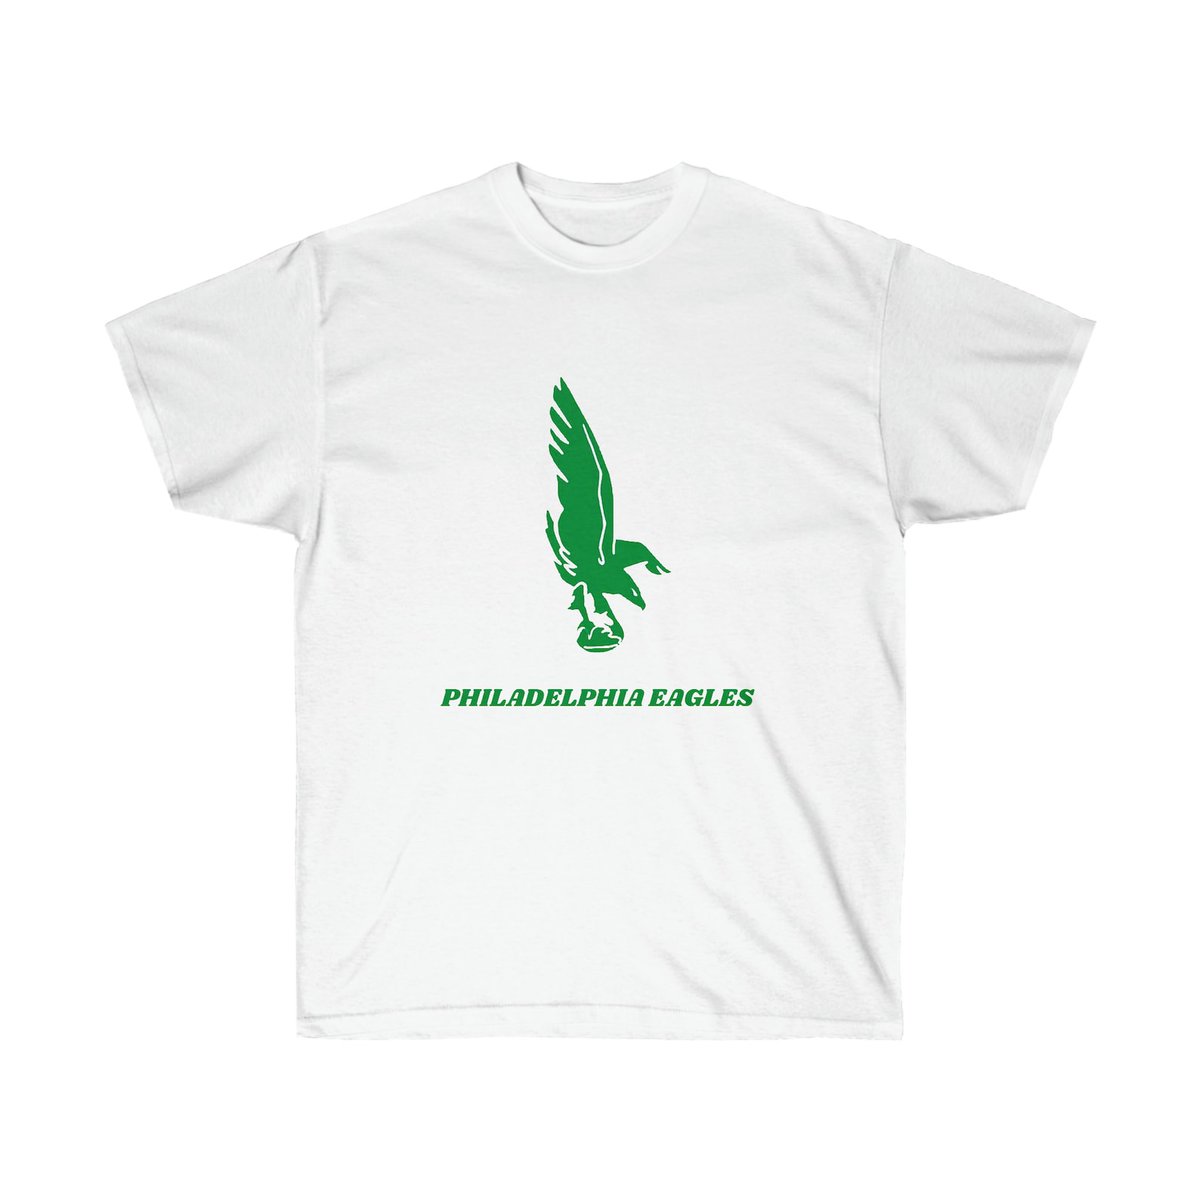 Philadelphia eagles vintage logo shirt #logo #Eagles #Vintage #gift #shirt #LilNitwits #EtsyEmail 👉etsy.com/listing/136359…